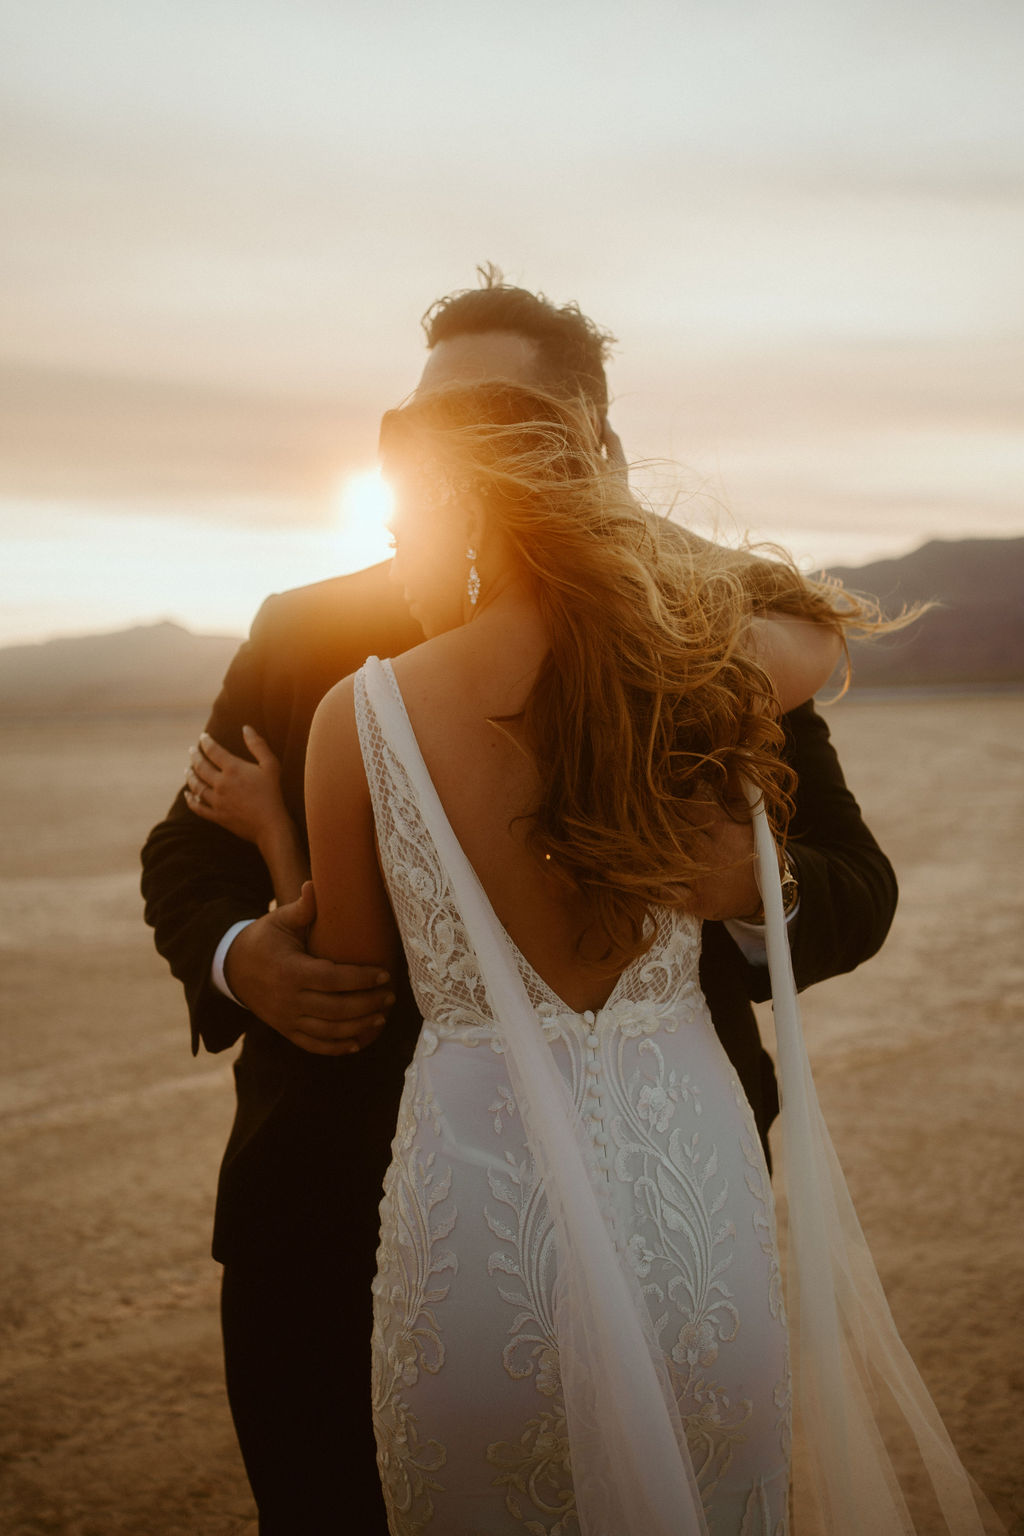 Bride and Groom Hugging During Sunset in Desert 